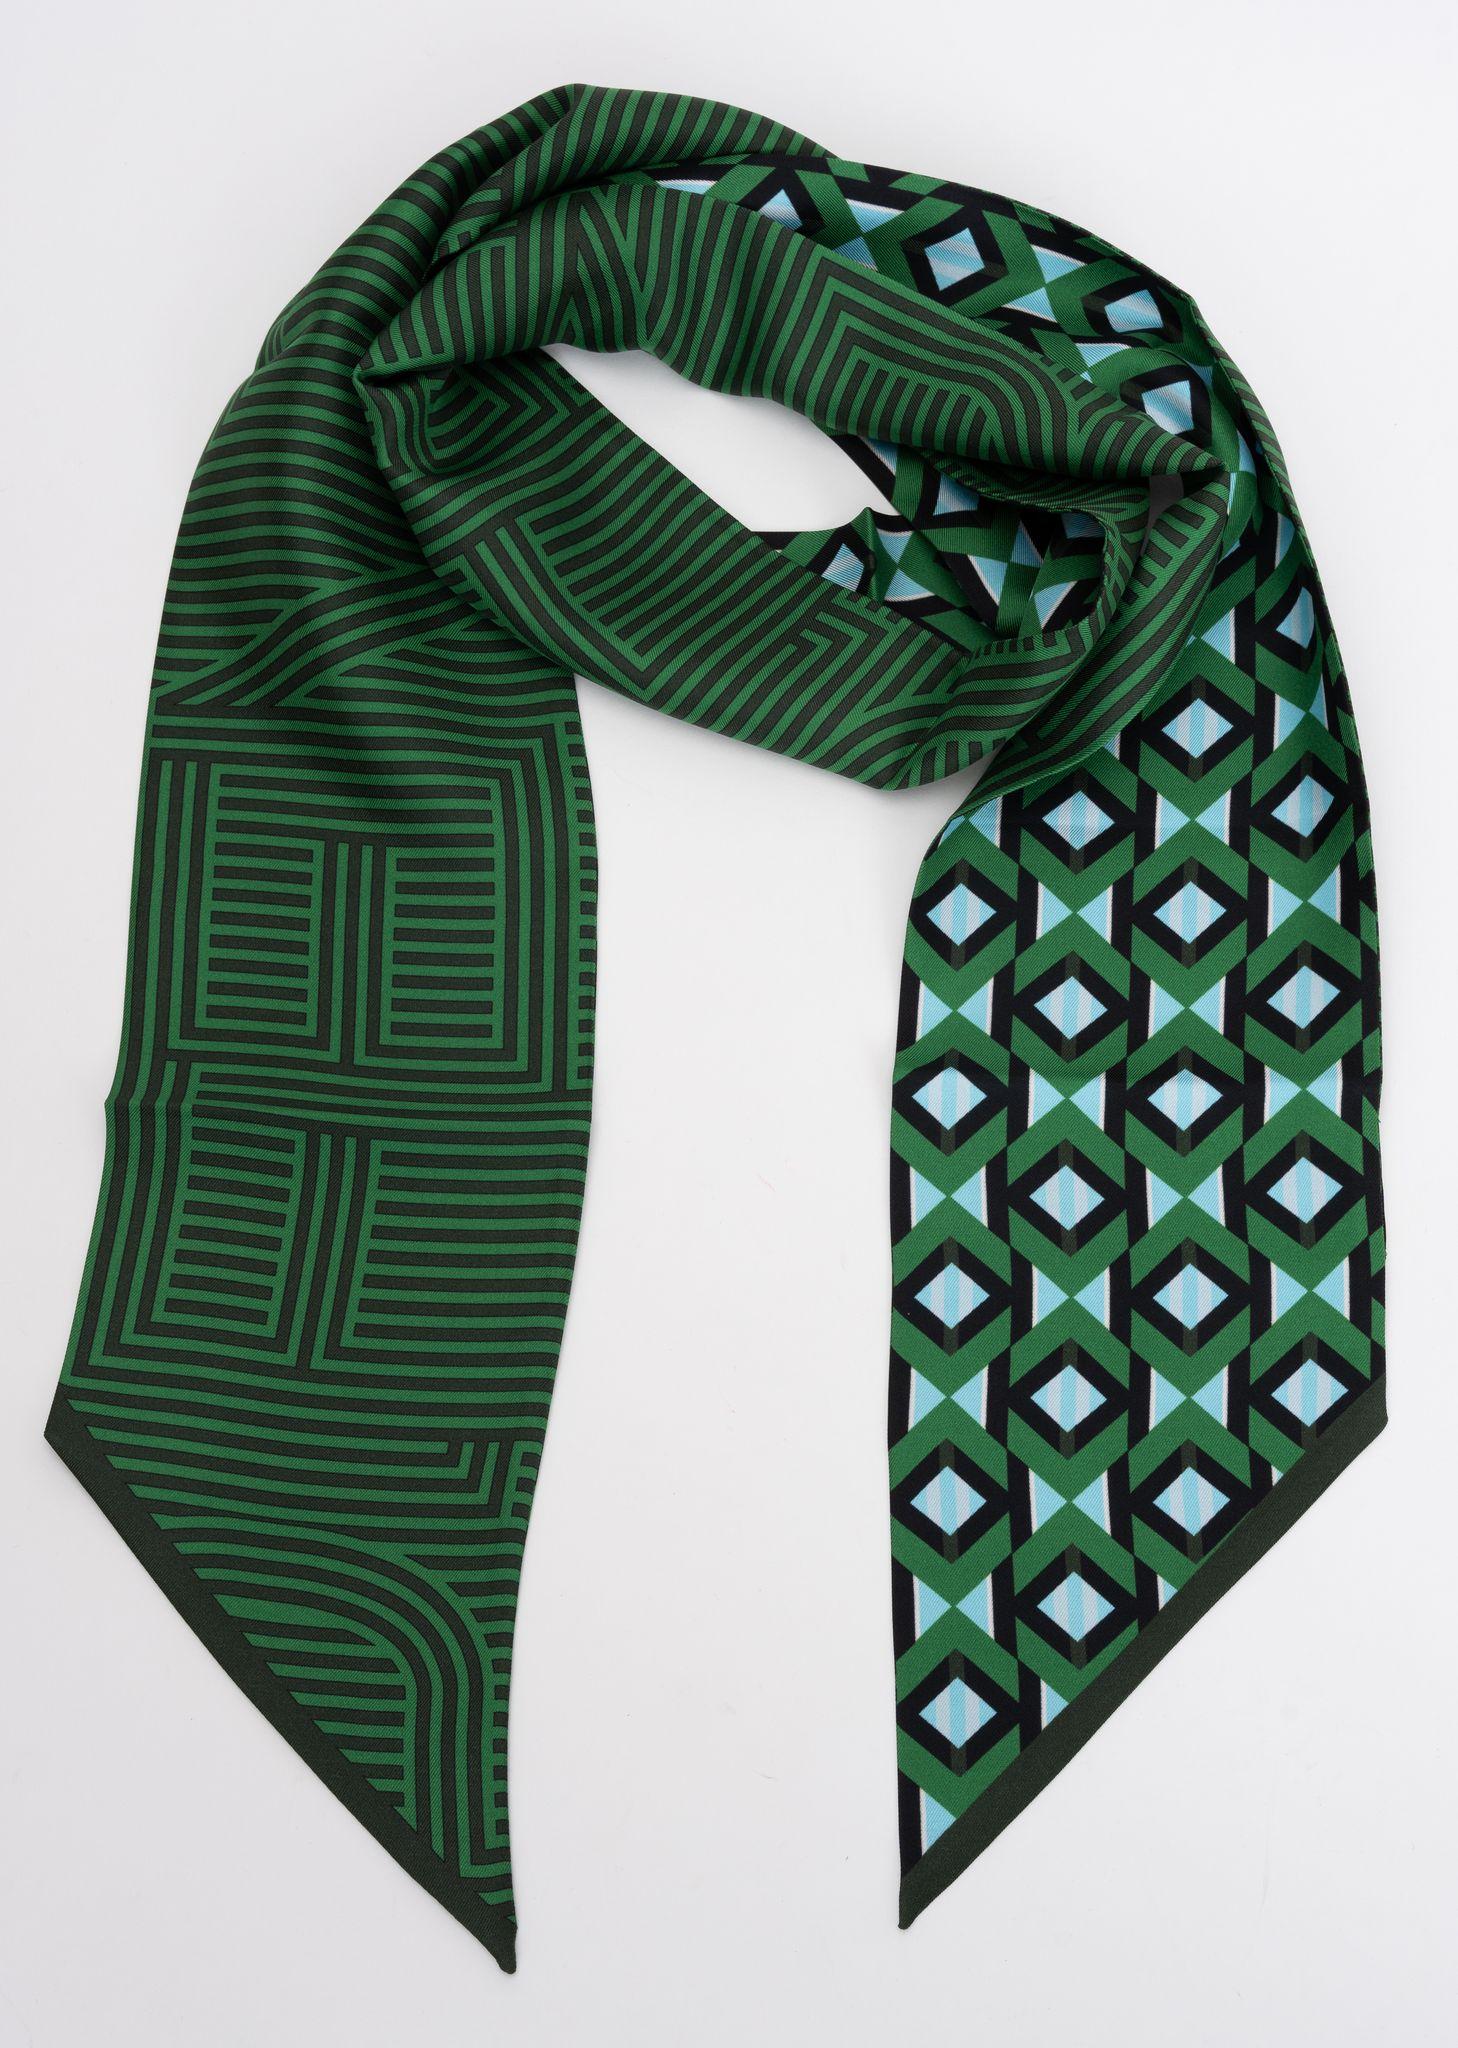 Fendi green black celeste optical 100% Silk maxi Twilly. Reversible pattern, versatile scarf. 
Brand new in unused condition.